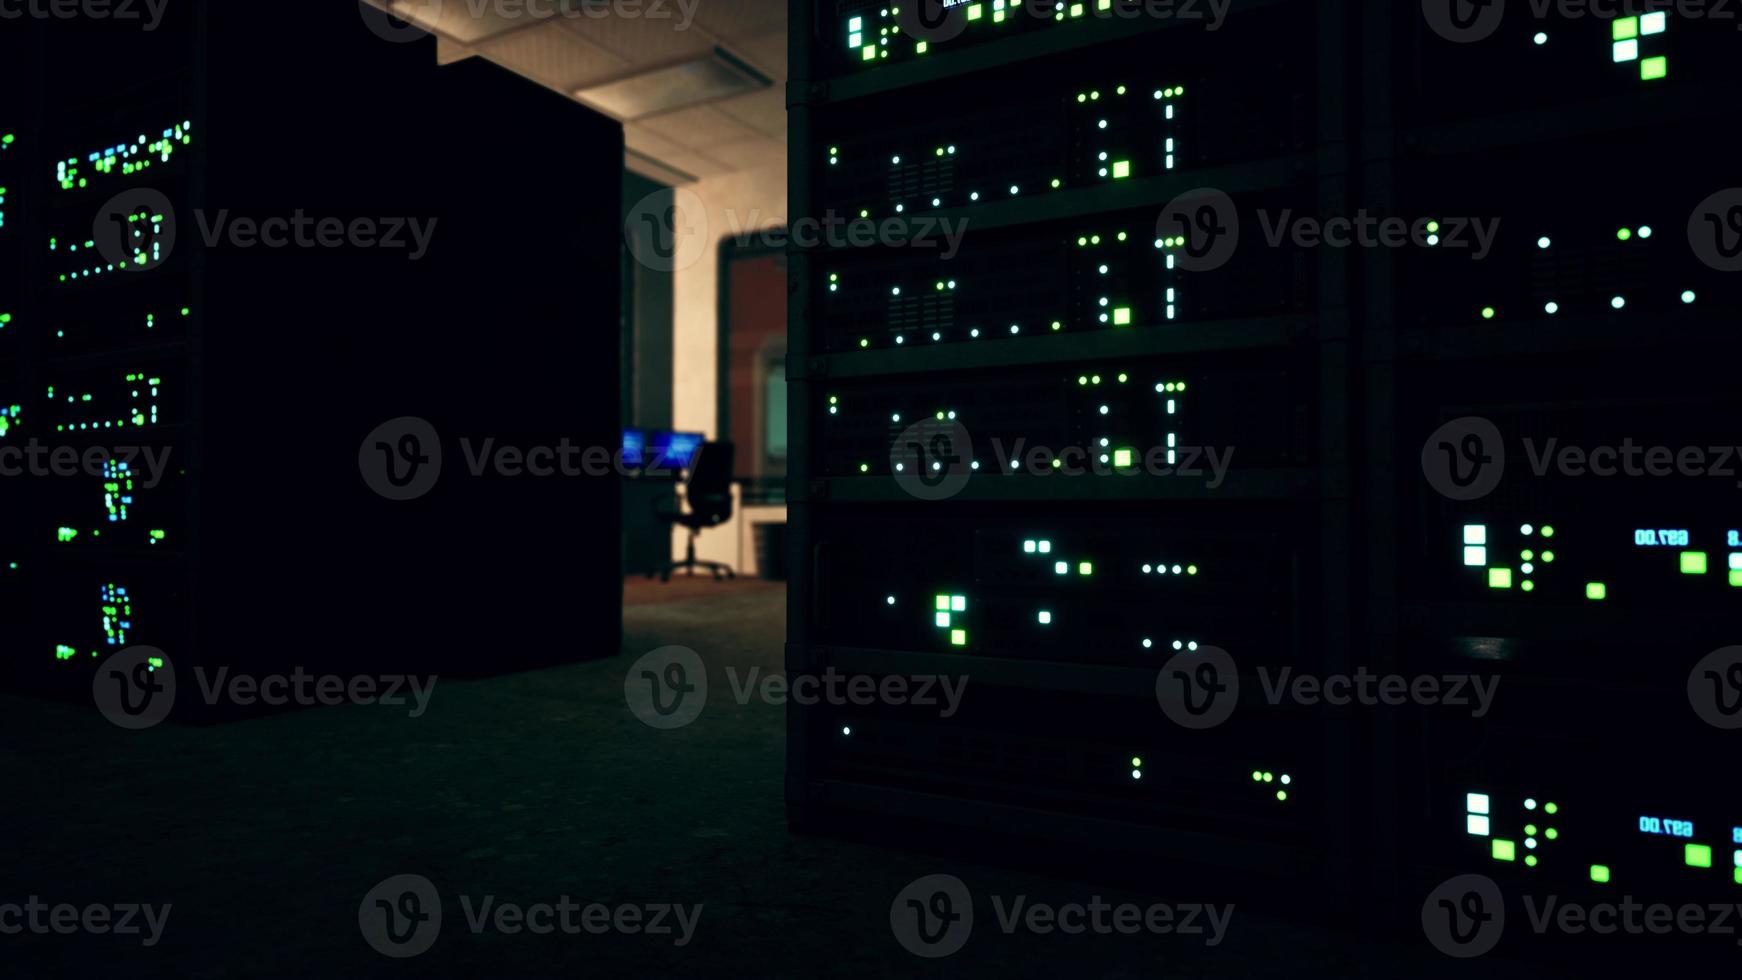 modernt serverrum med superdatorer ljus foto